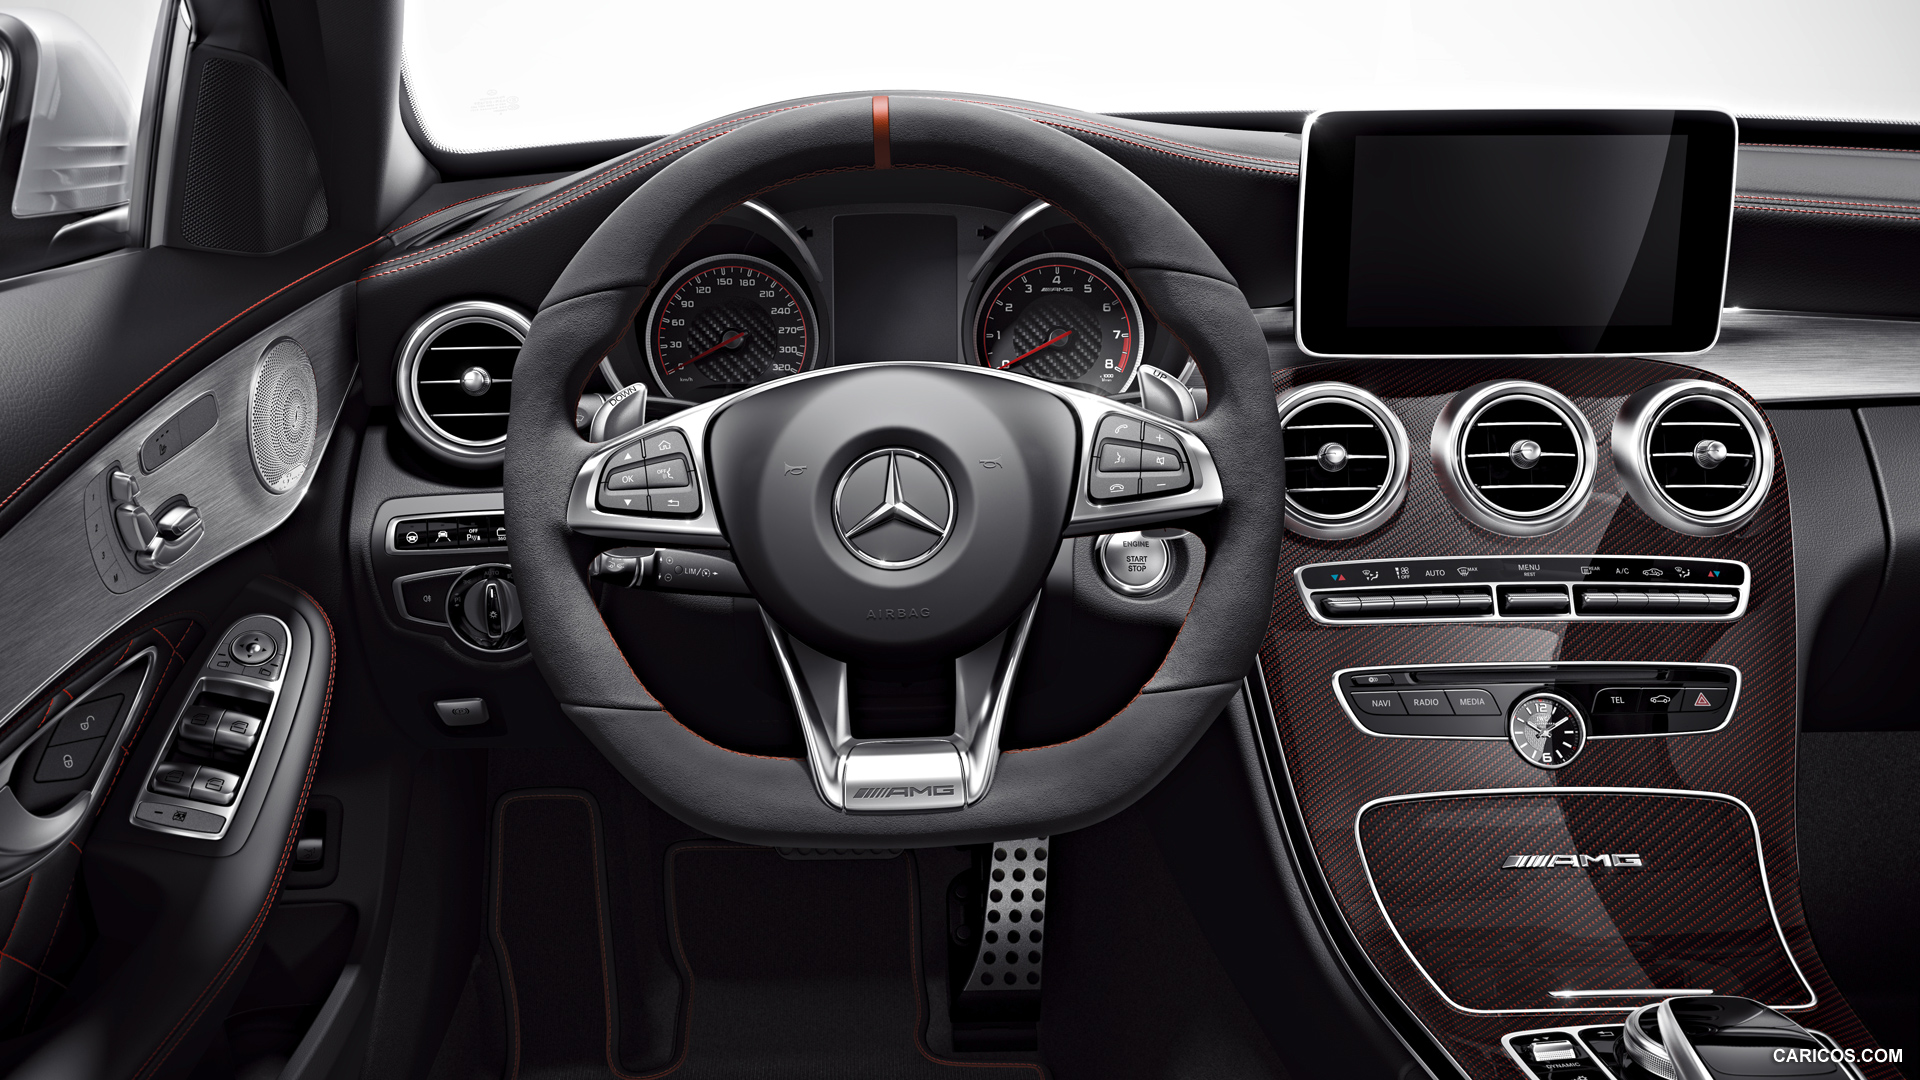  2015 Mercedes-Benz C63 AMG Edition 1 - Interior, #11 of 13